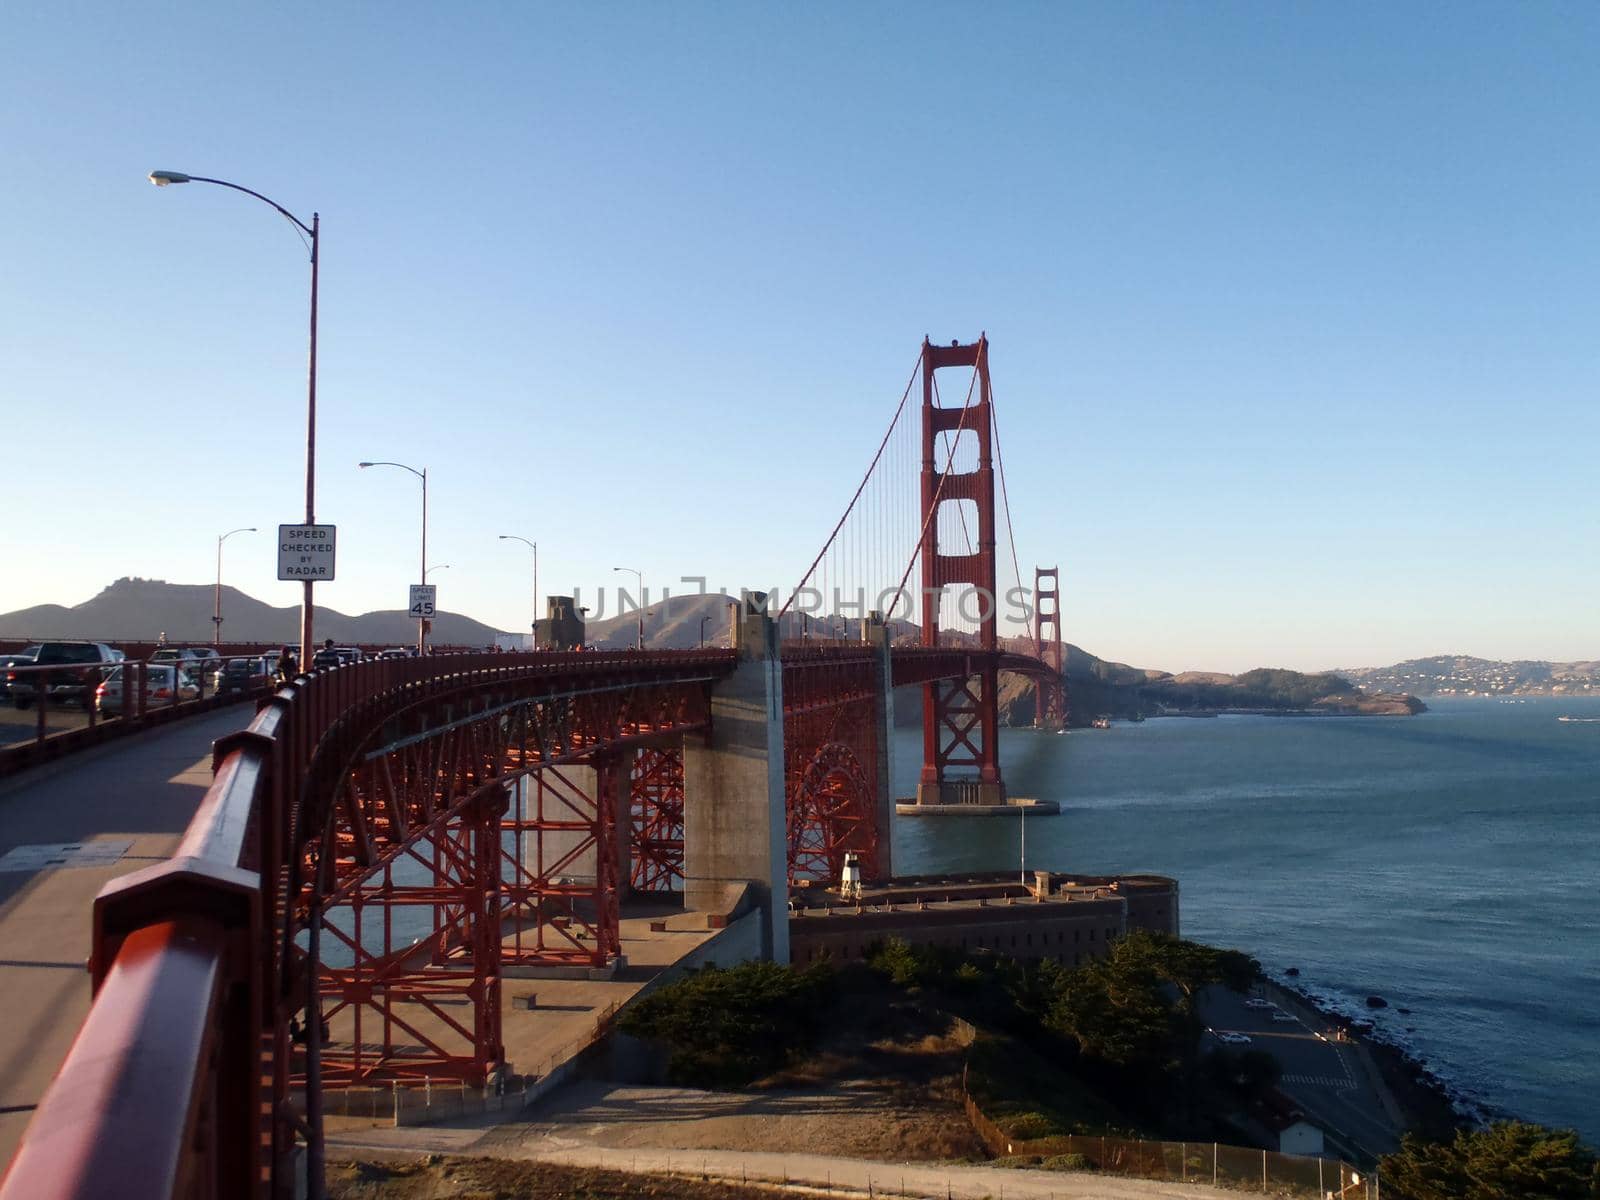 The Golden Gate Bridge in San Francisco bay seen from beginning of bridge on San Frnacisco side in California.  Old historic Fort Point can be seen below bridge.